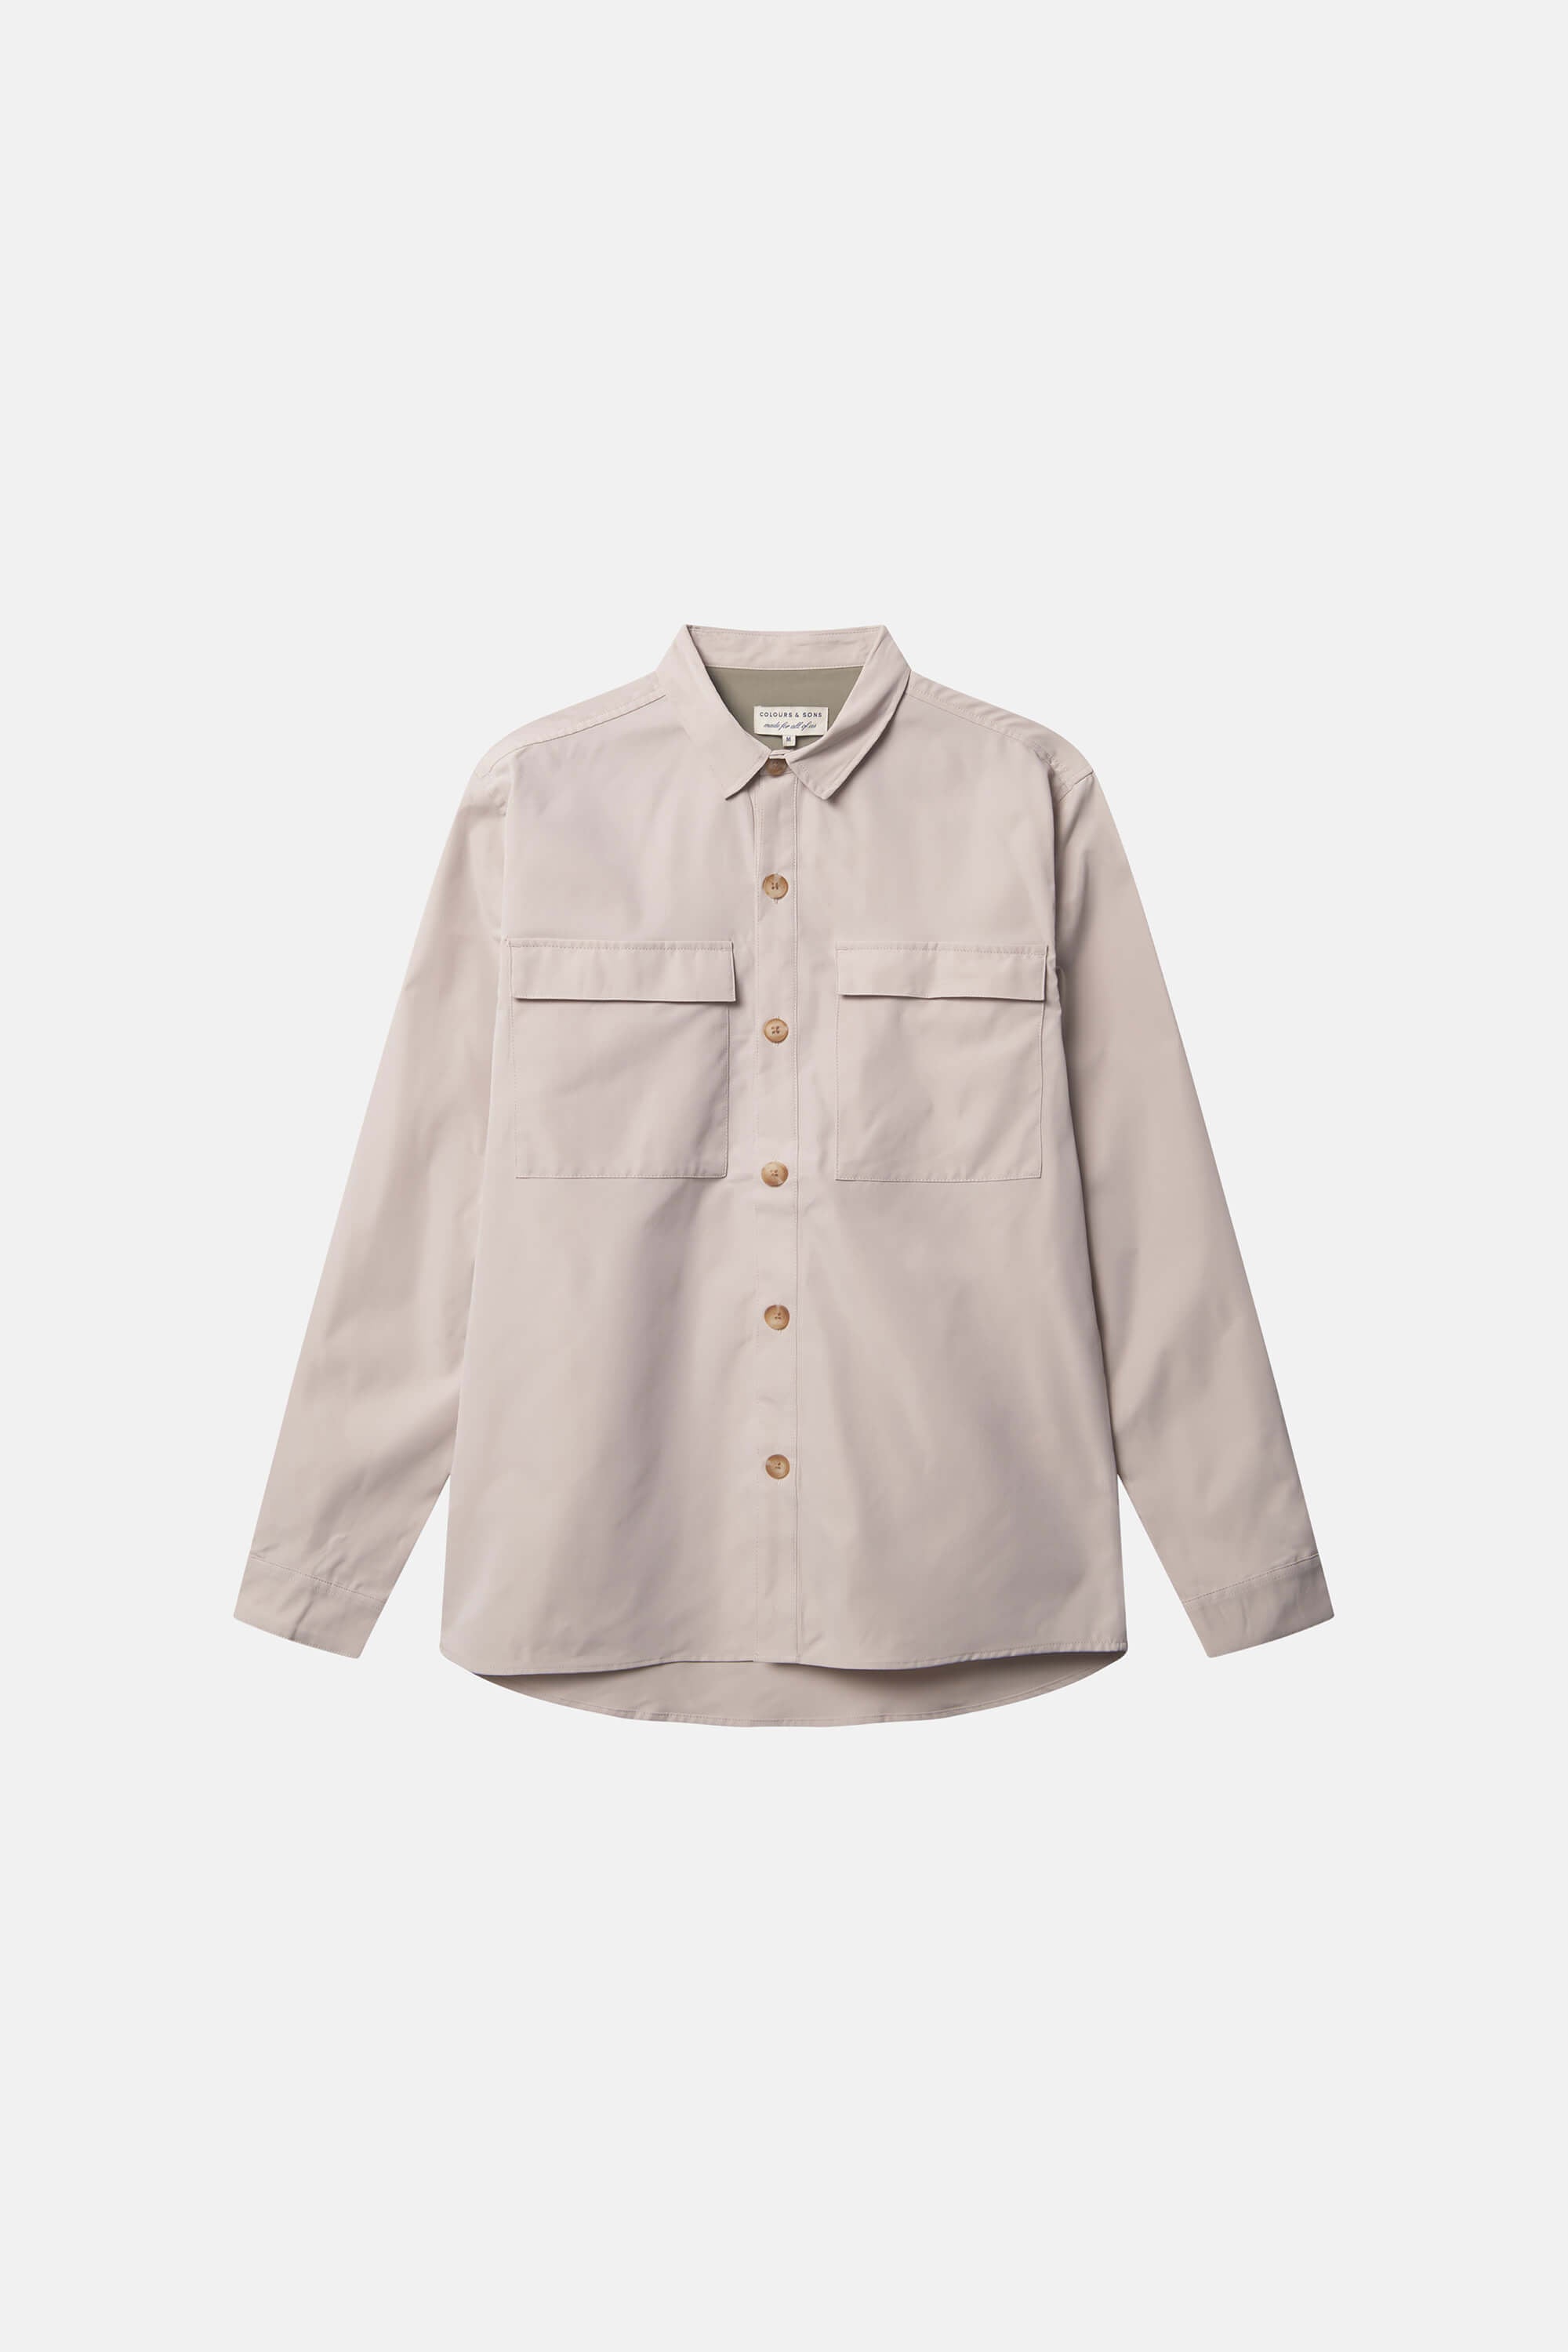 Herren Hemd Overshirt, offwhite, 100% Polyester  von Colours & Sons